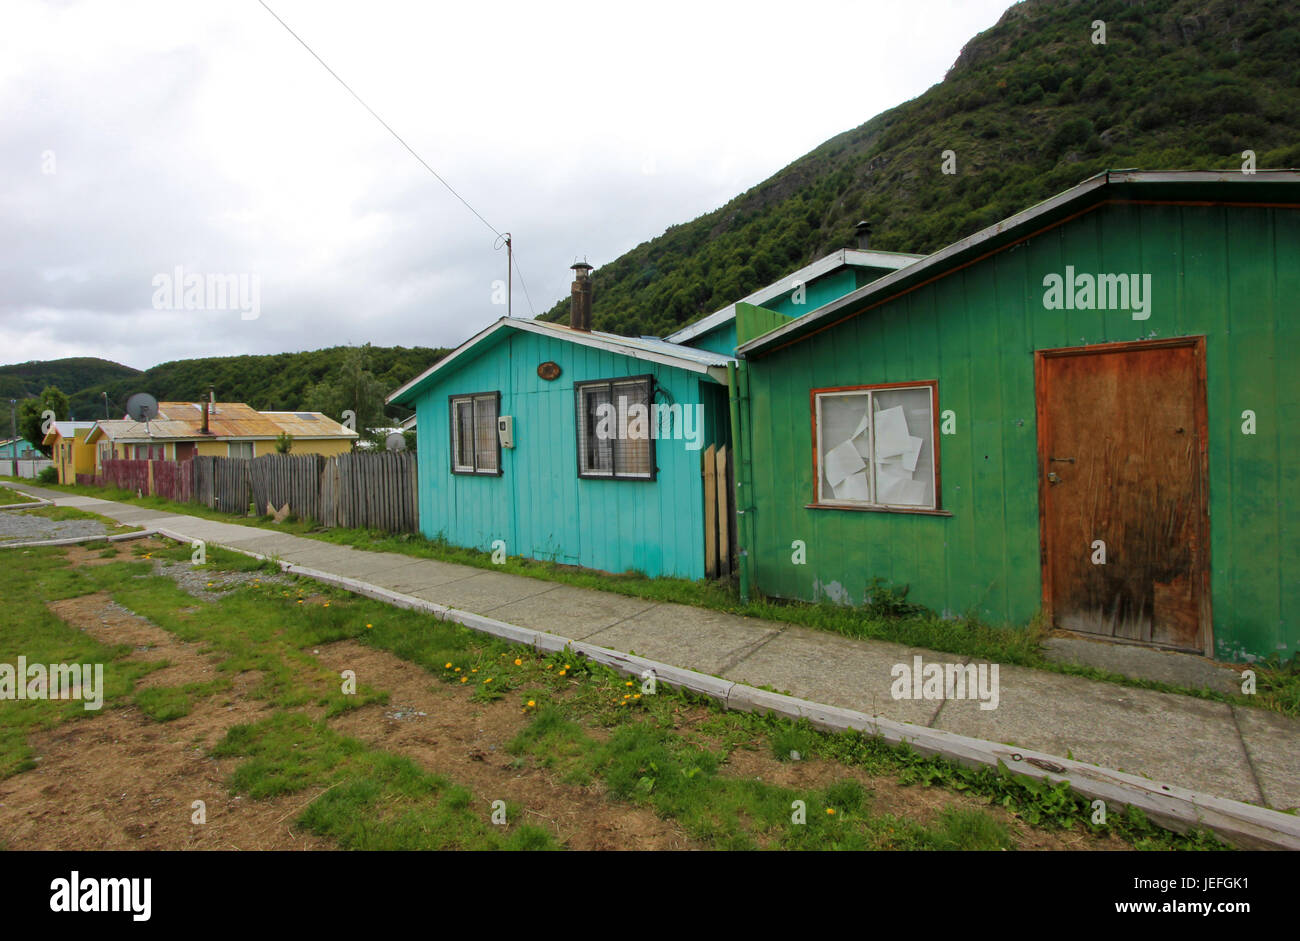 Houses in Villa O'Higgins, Carretera Austral, Patagonia, Chile Stock Photo